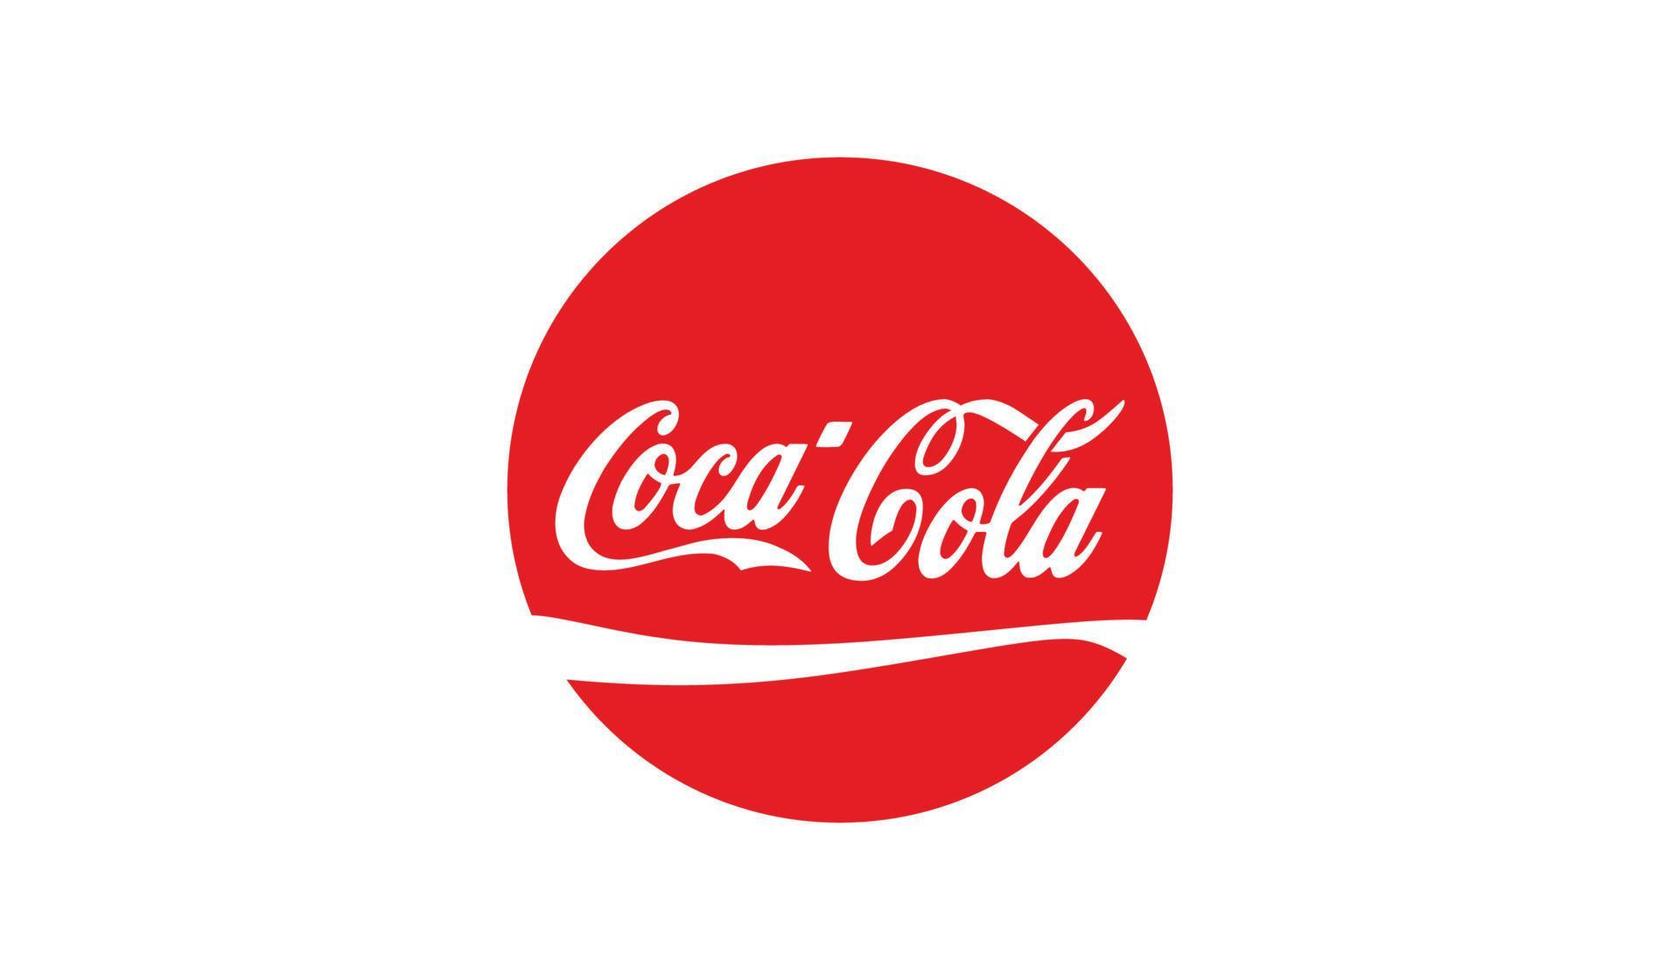 Coca Cola logo popular drink brand logo 17792876 Vector Art at ...